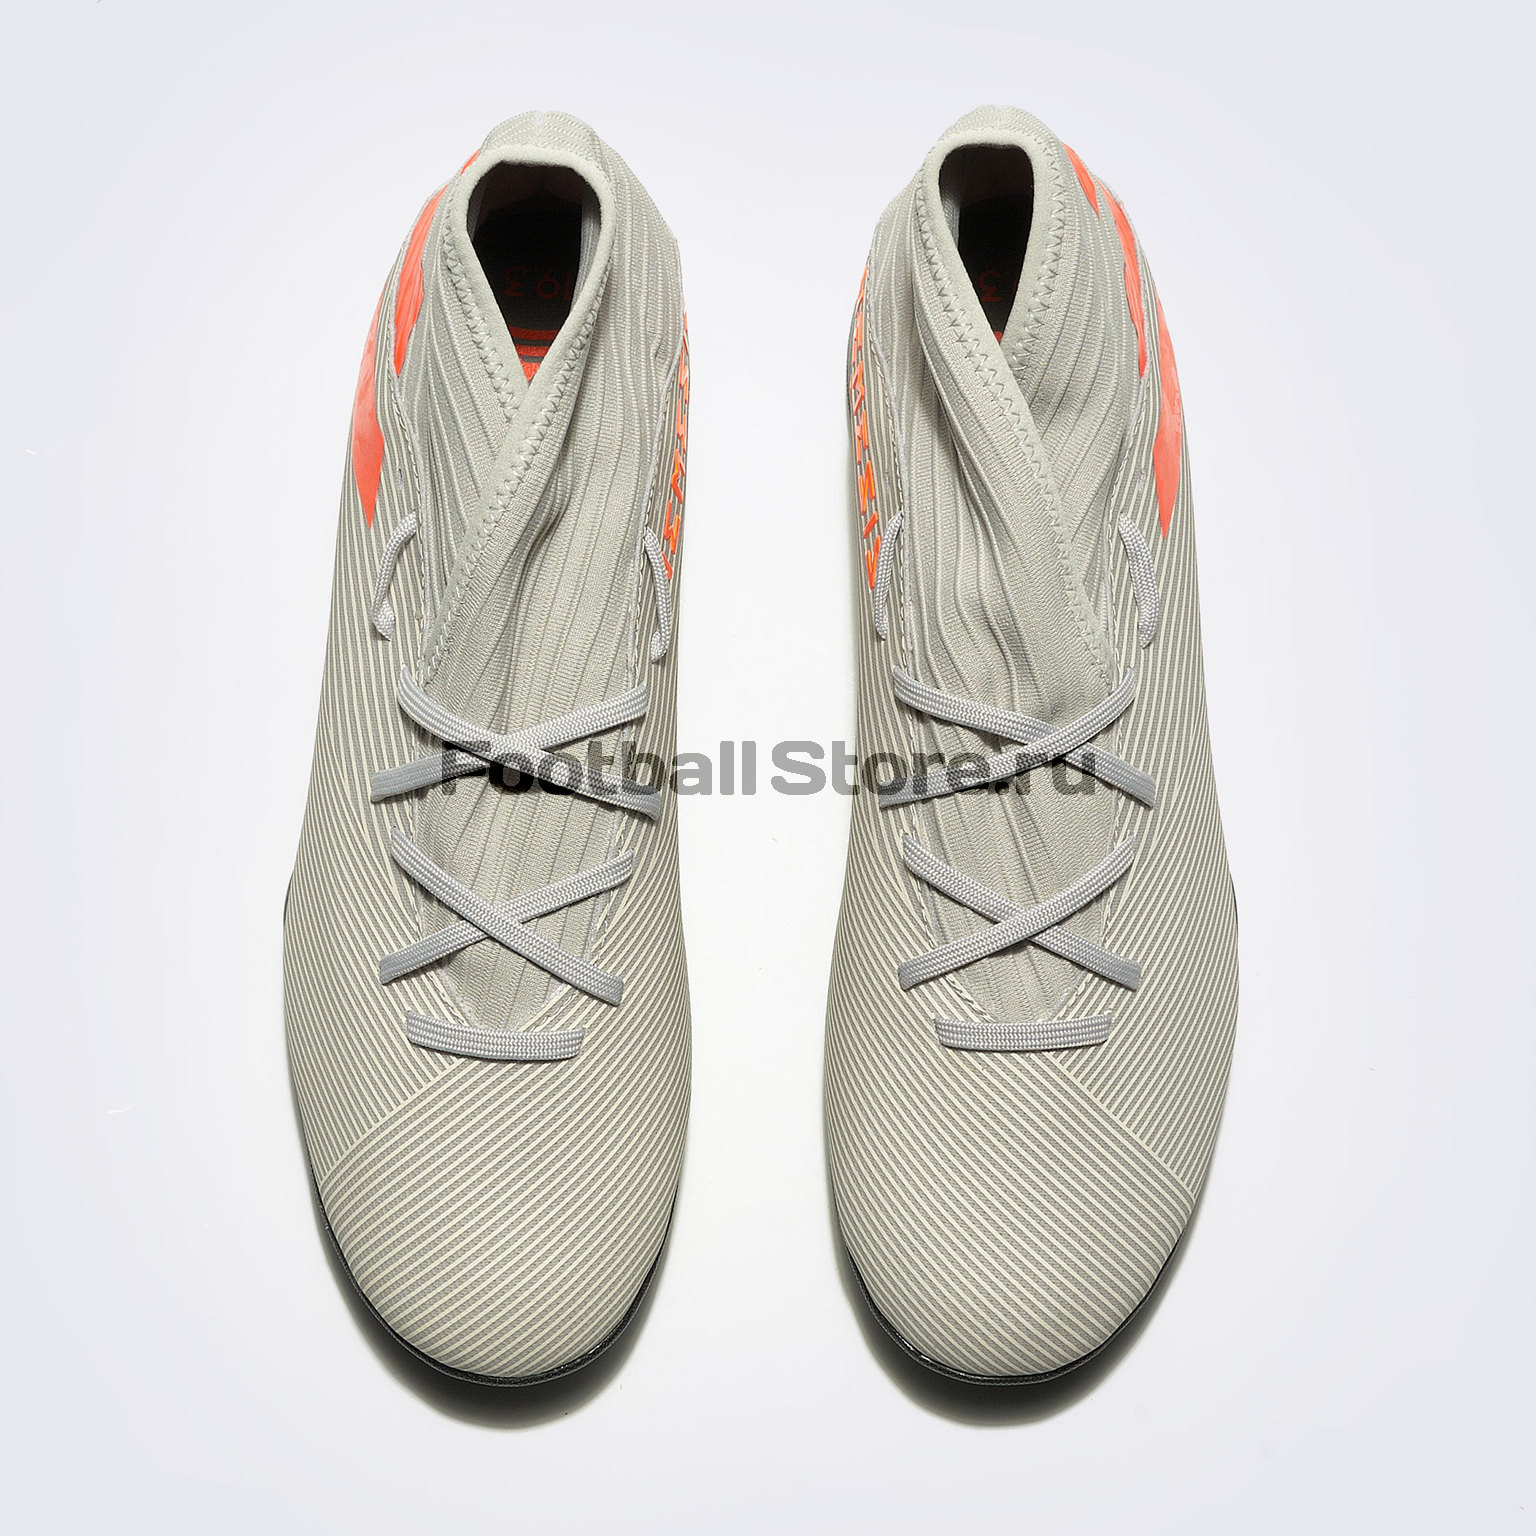 Шиповки Adidas Nemeziz 19.3 TF EF8291